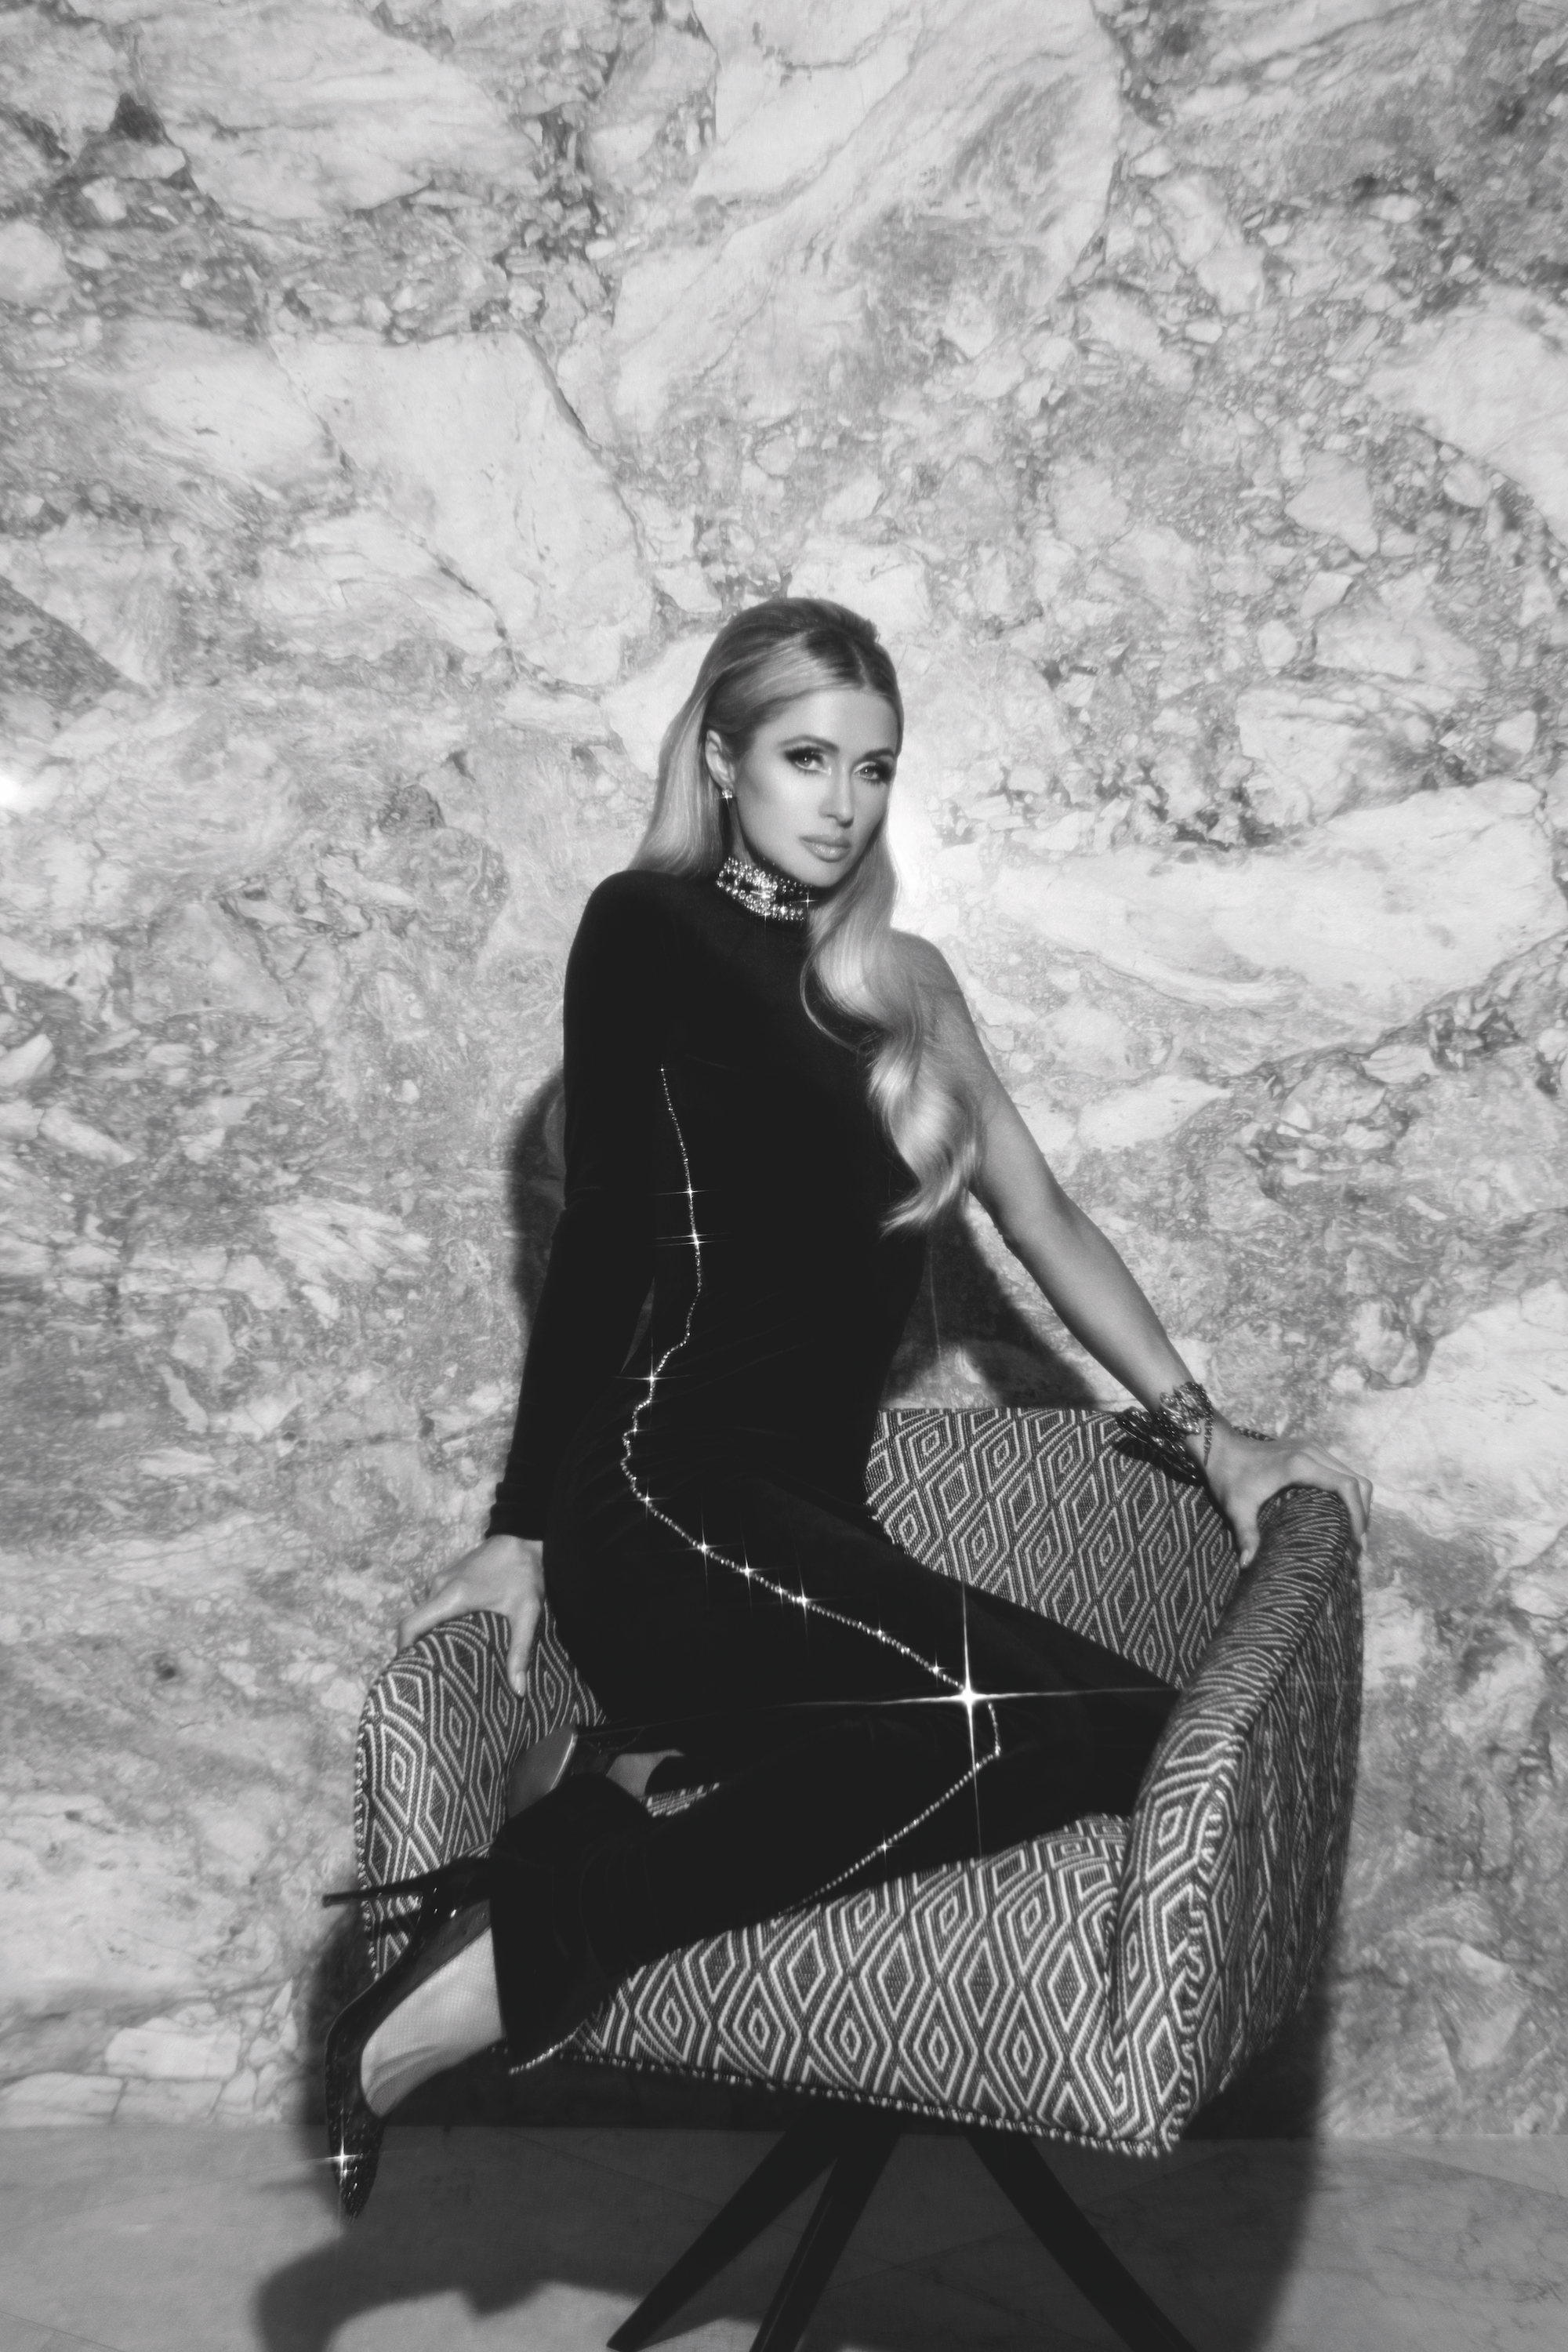 Photos n°6 : Paris Hilton Oozing Sex Appeal in New Shoot!